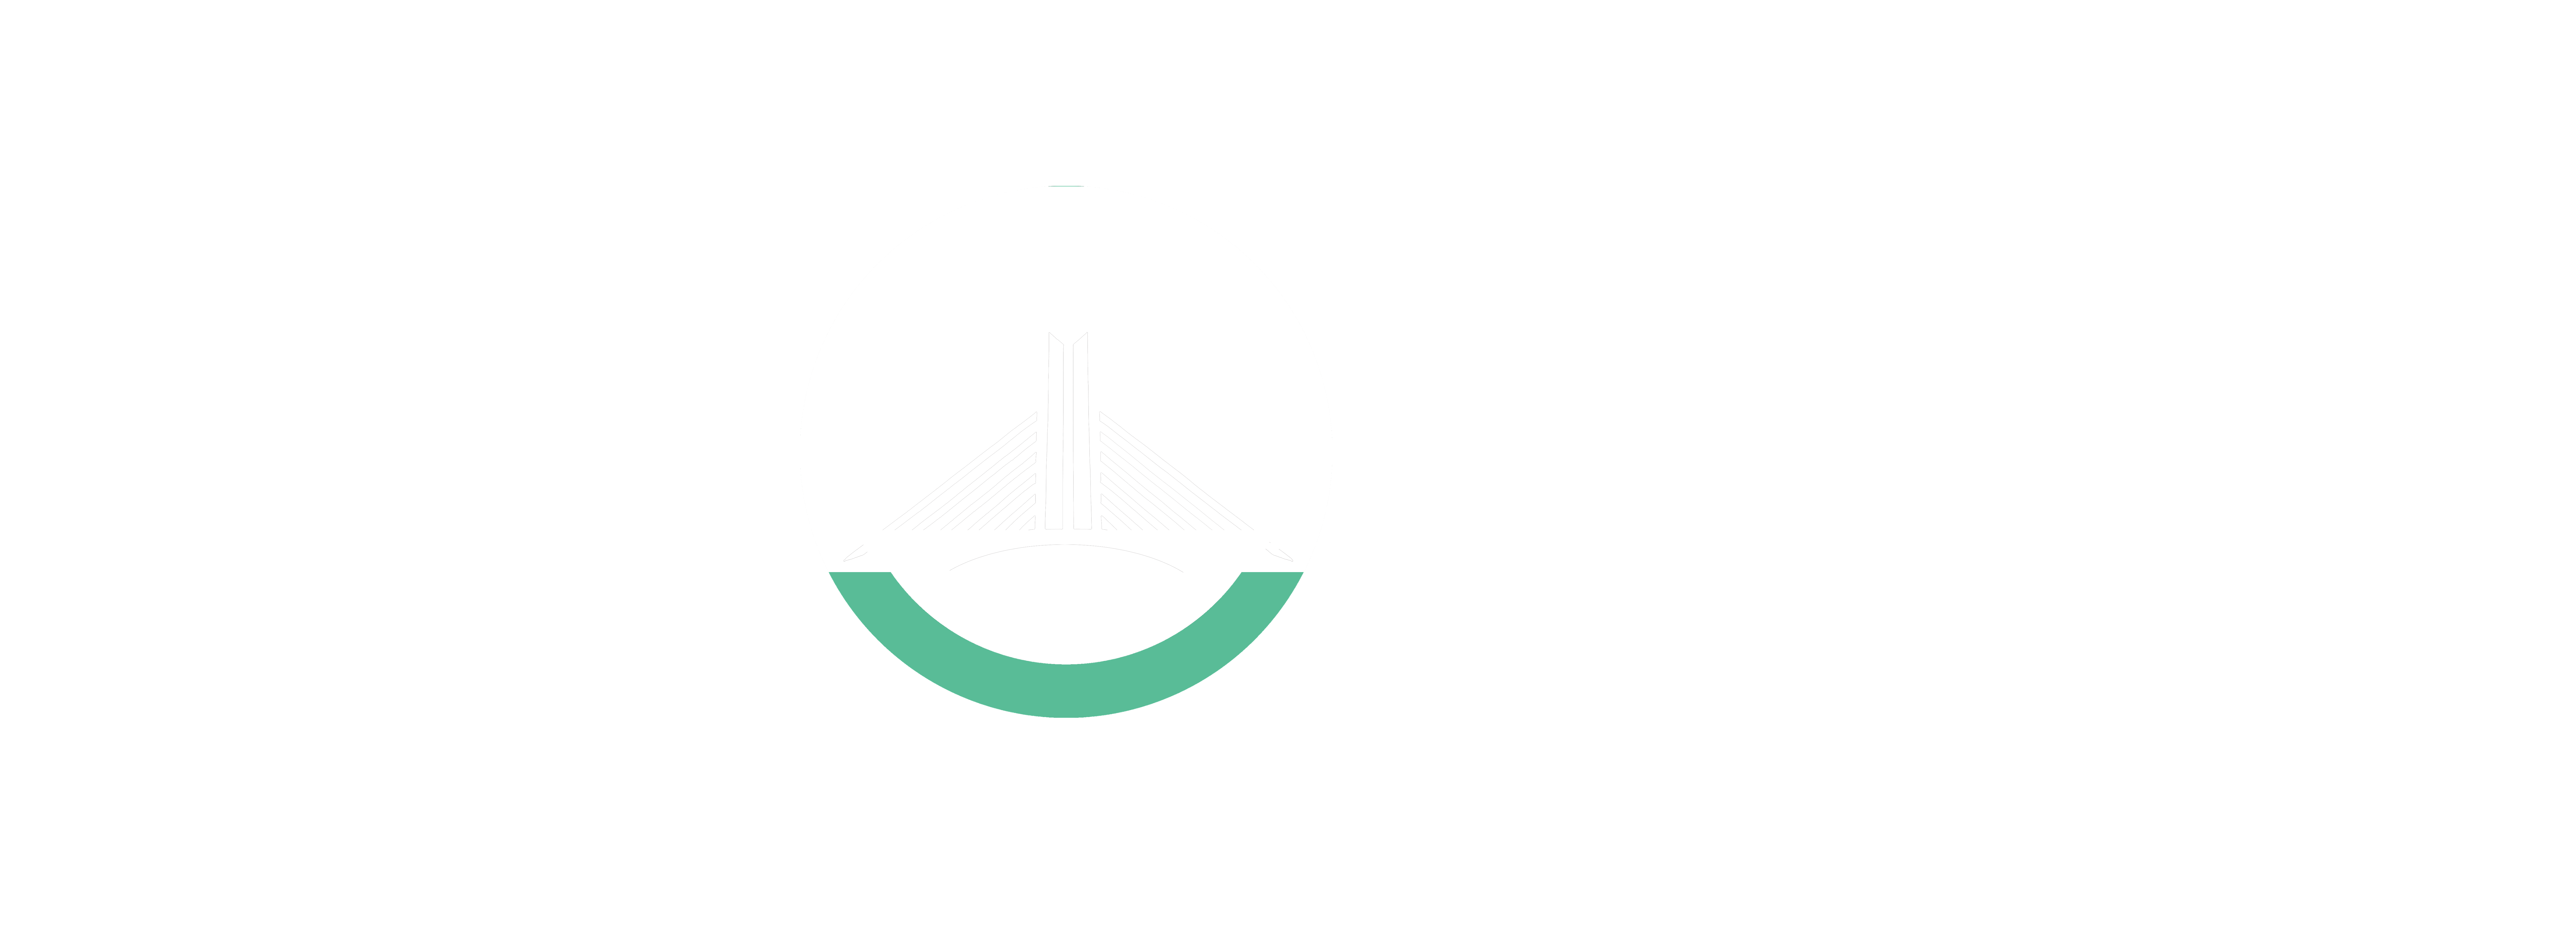 Pont Logo